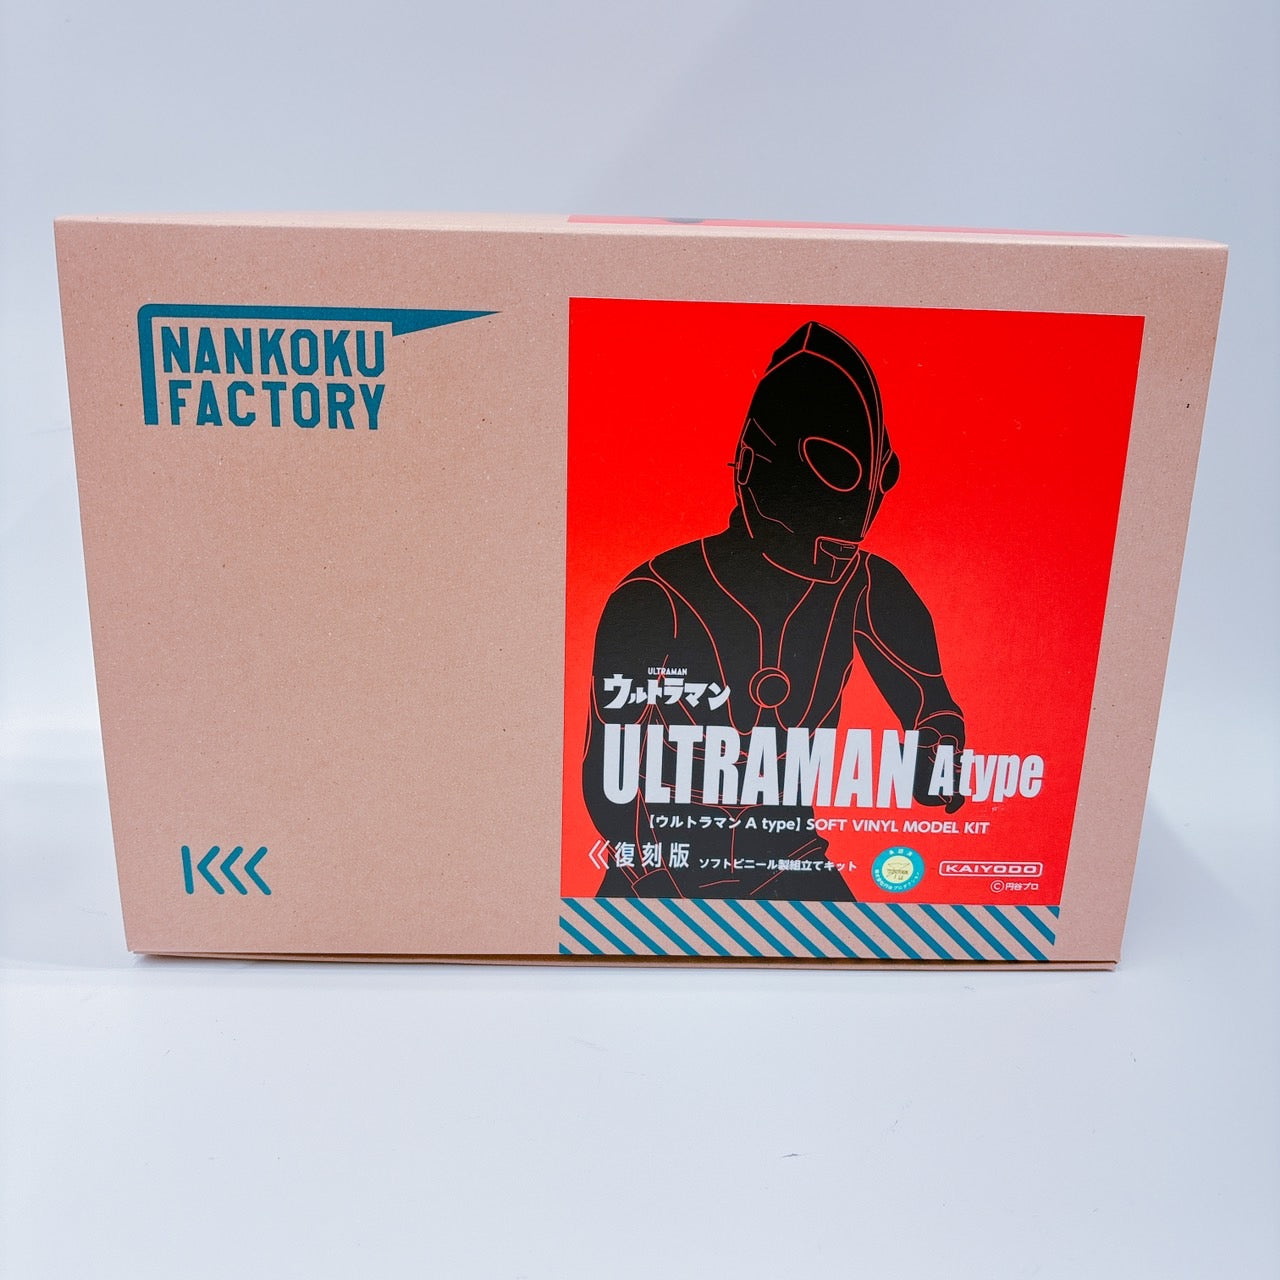 Ultraman (Typ A) / Mega Soft Vinyl Kit Reproduktionsedition 